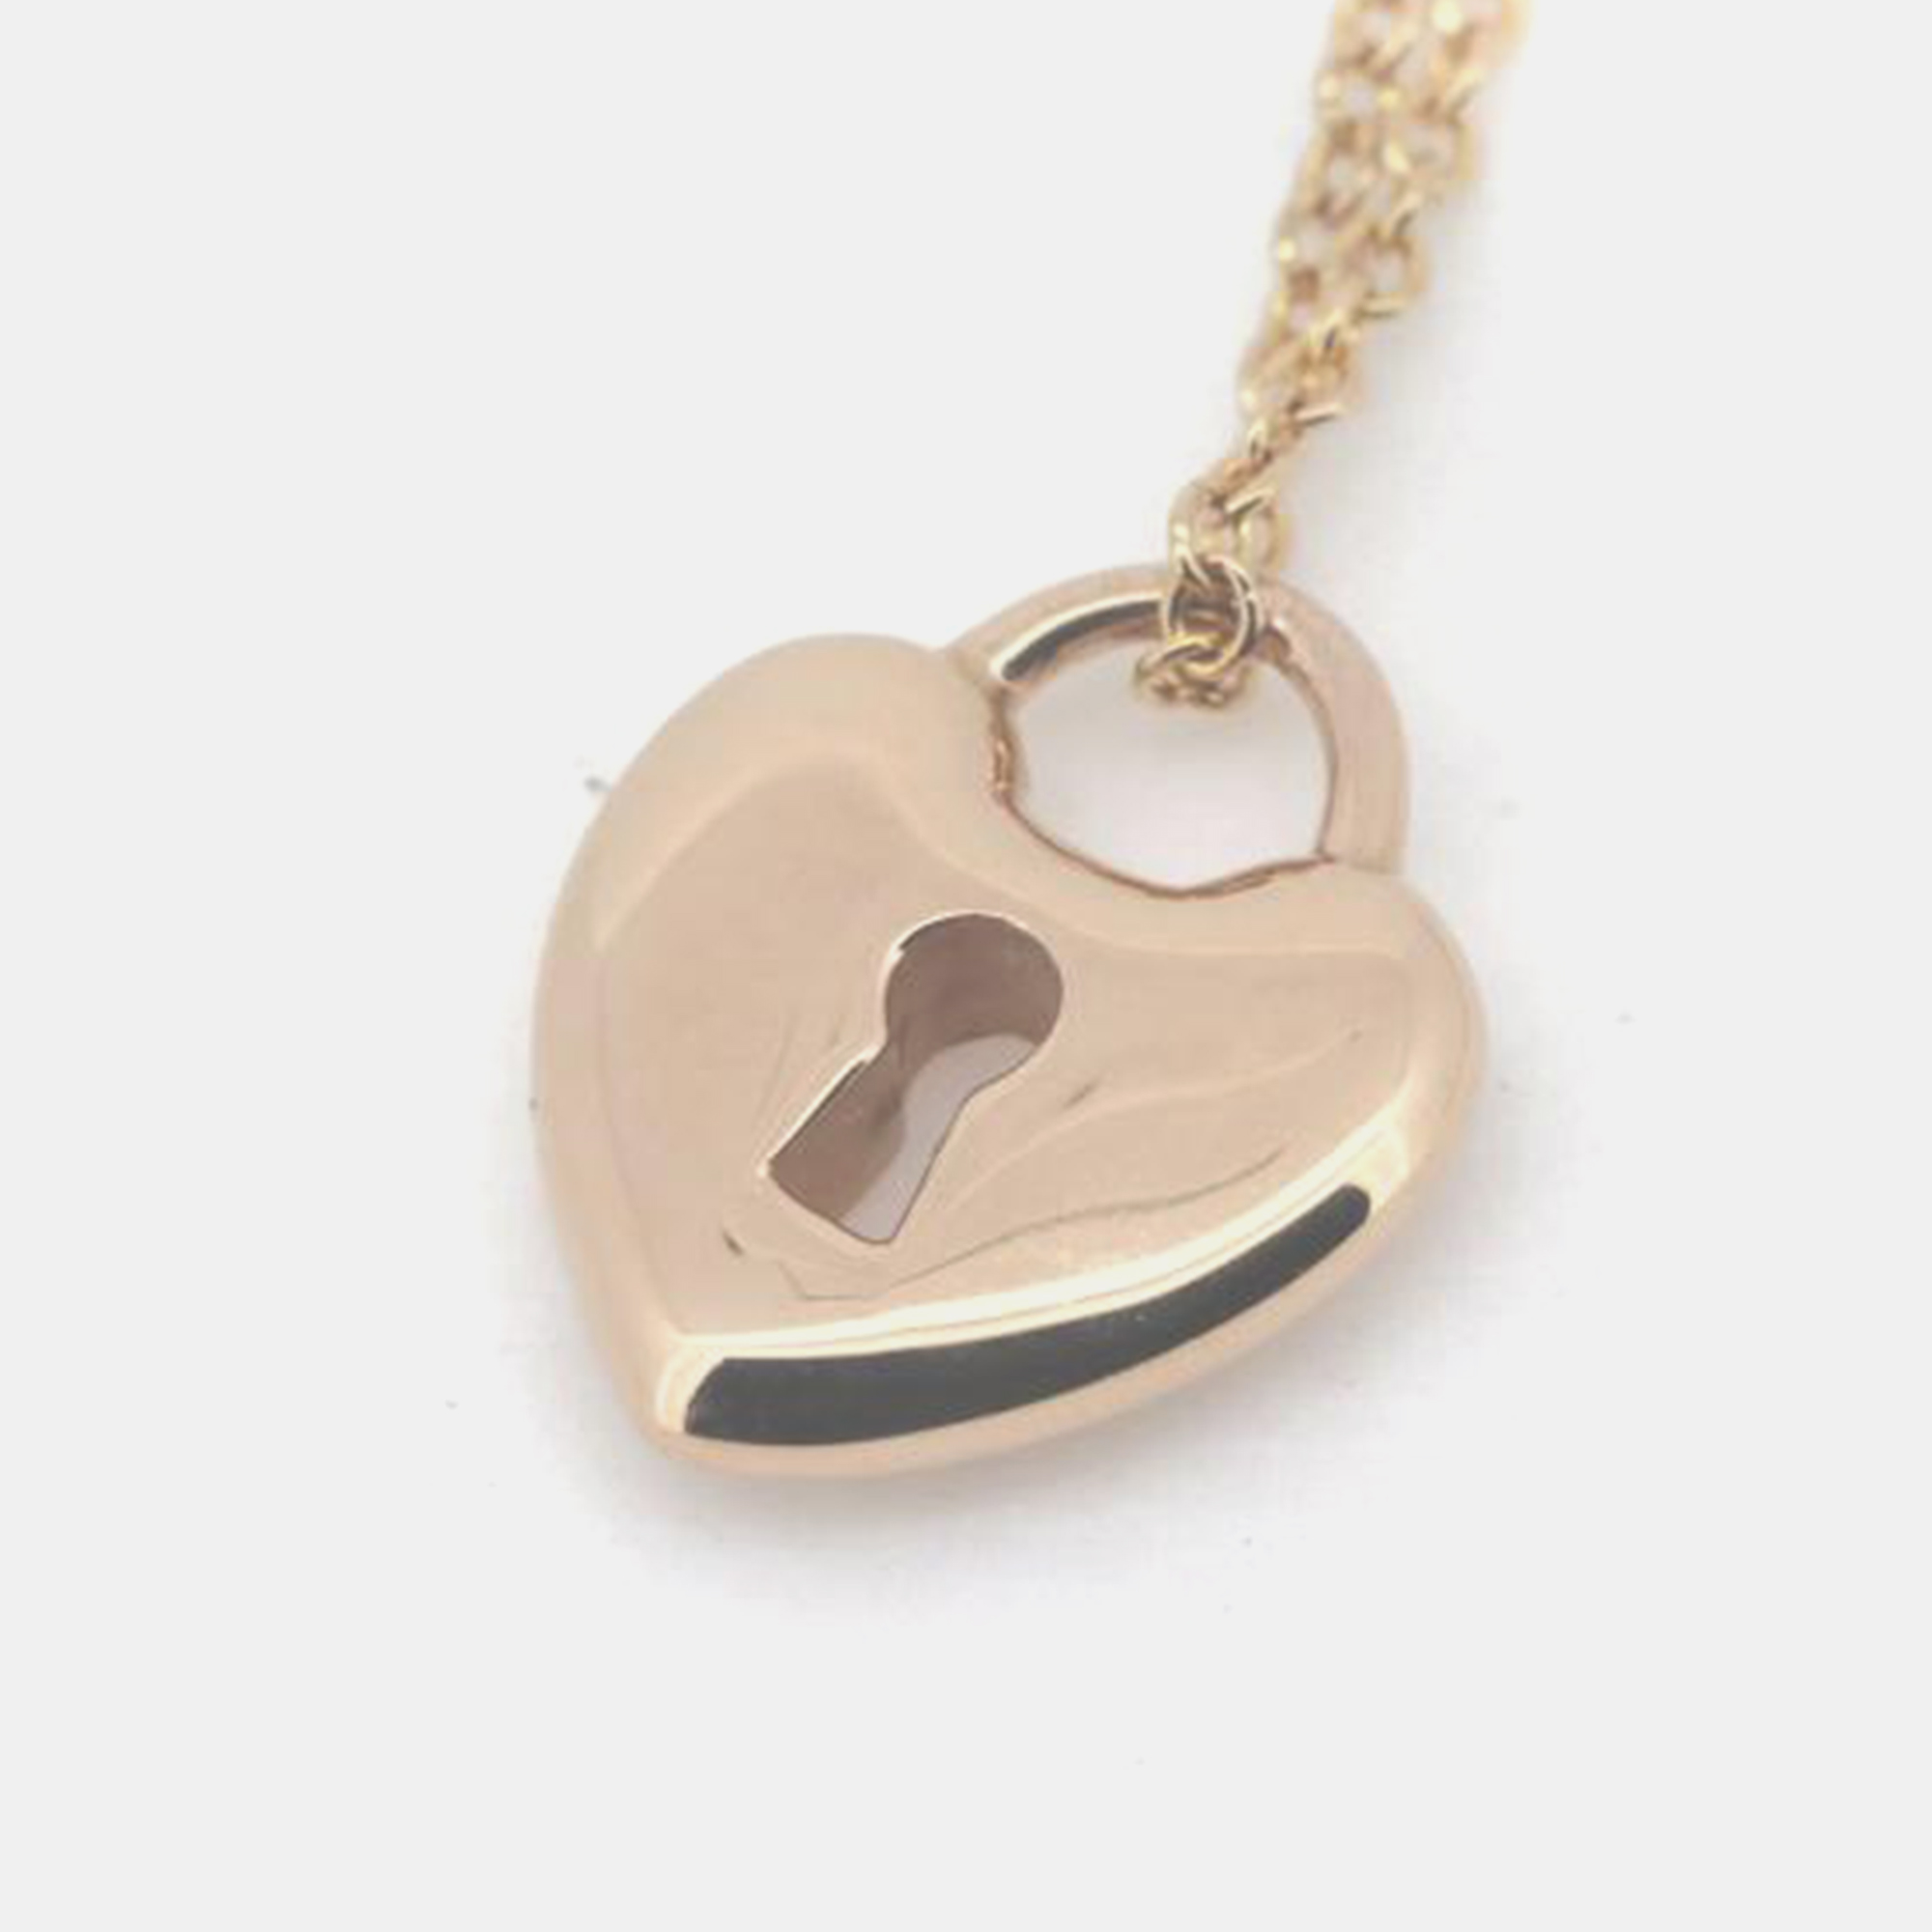 Tiffany & co. 18k yellow gold heart lock pendant necklace